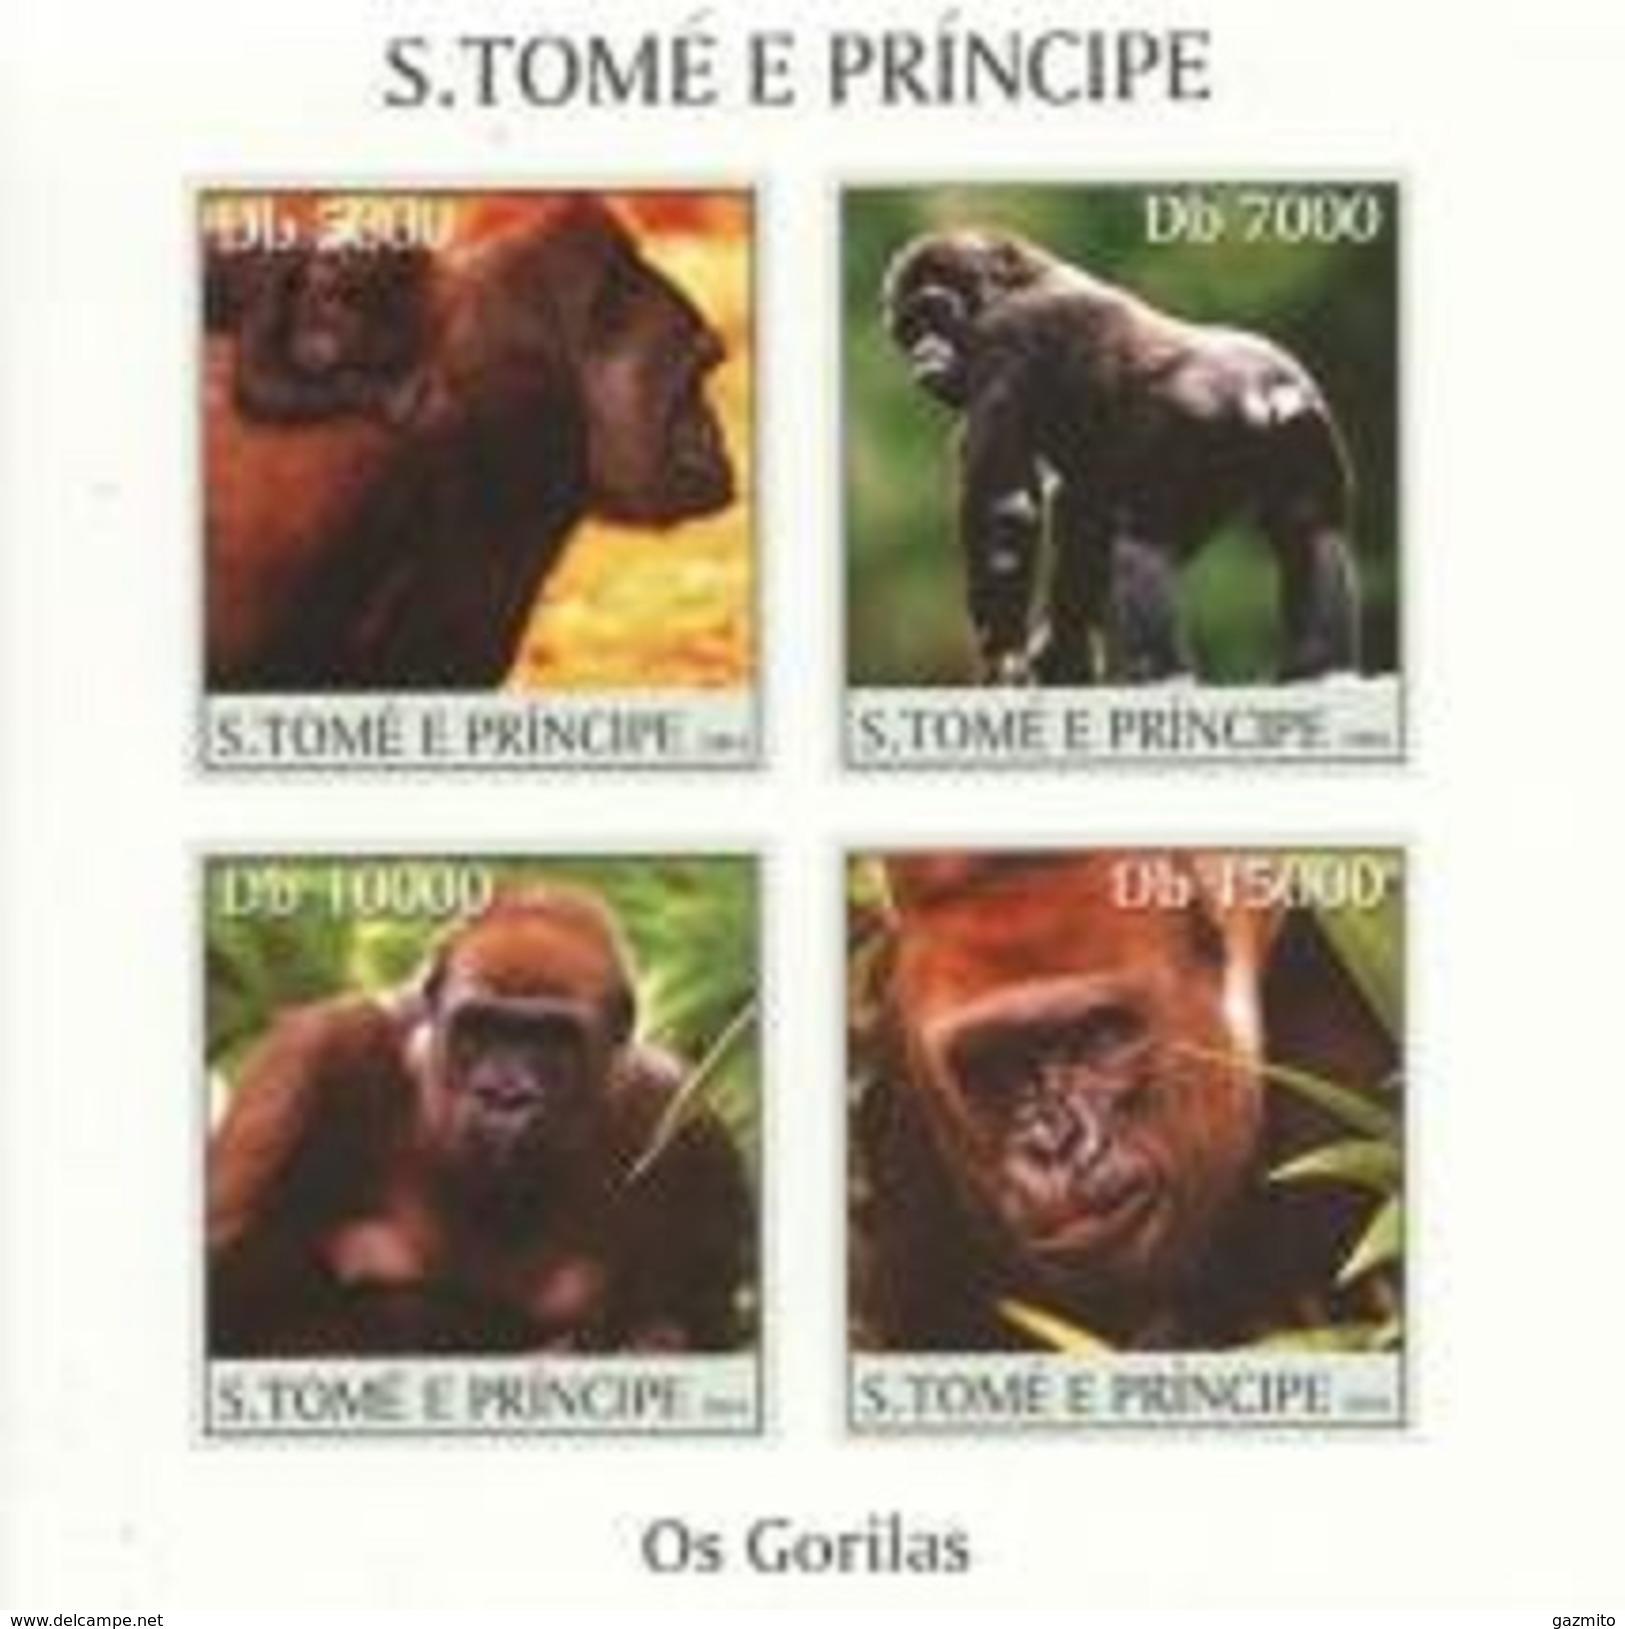 S. Tomè 2004, Animals, Gorillas, 4val In BF IMPERFORATED - Gorilla's